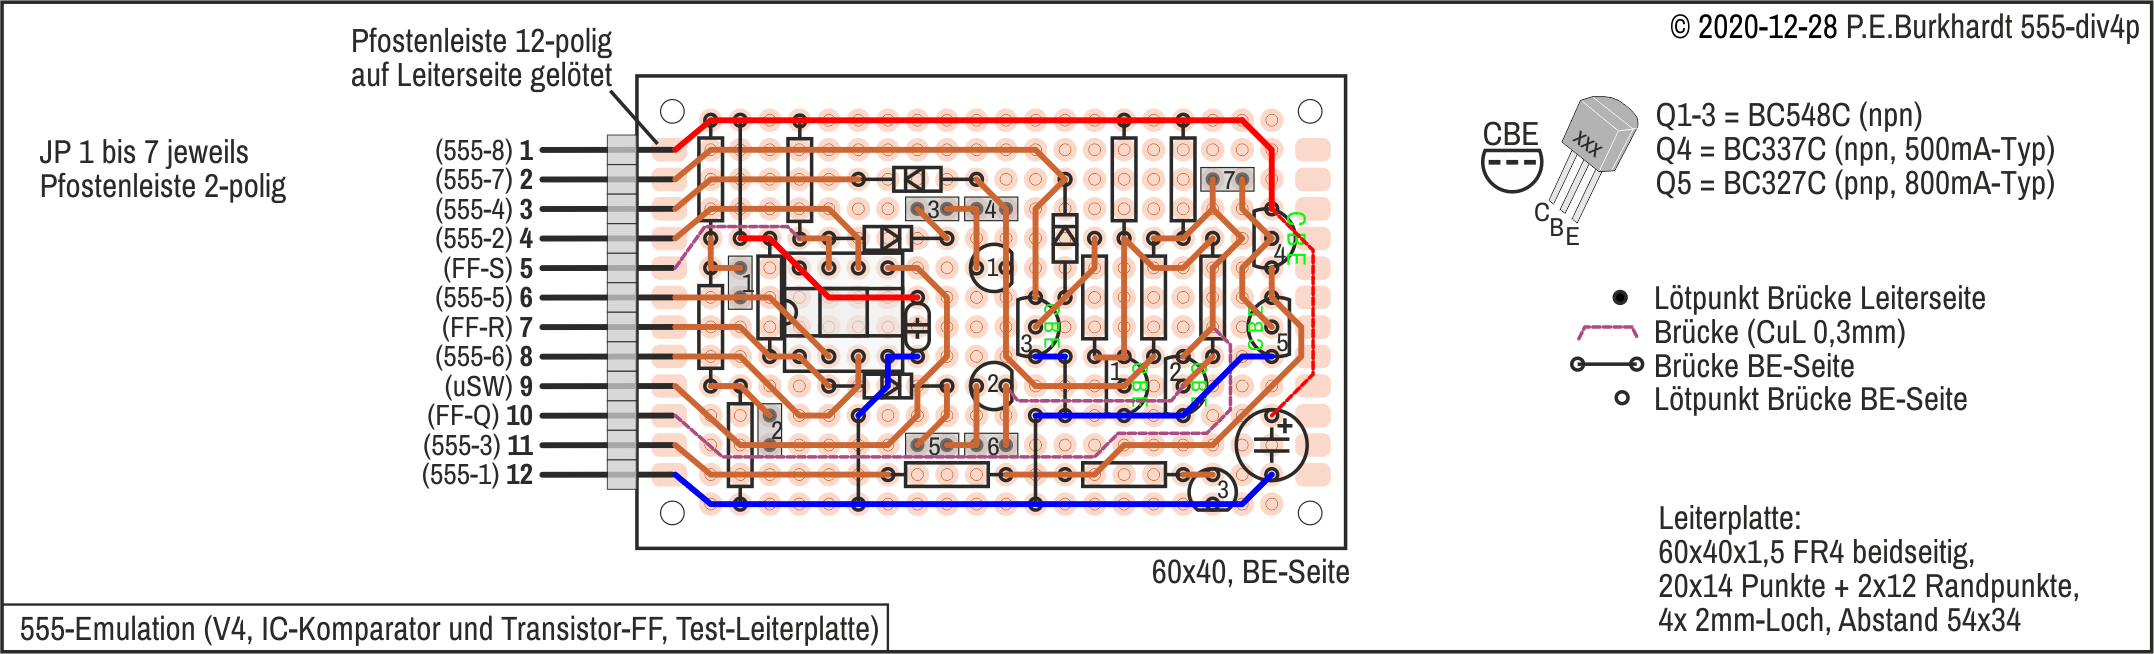 555-Emulation mit IC-Komparator und Transistor-FF, PCB